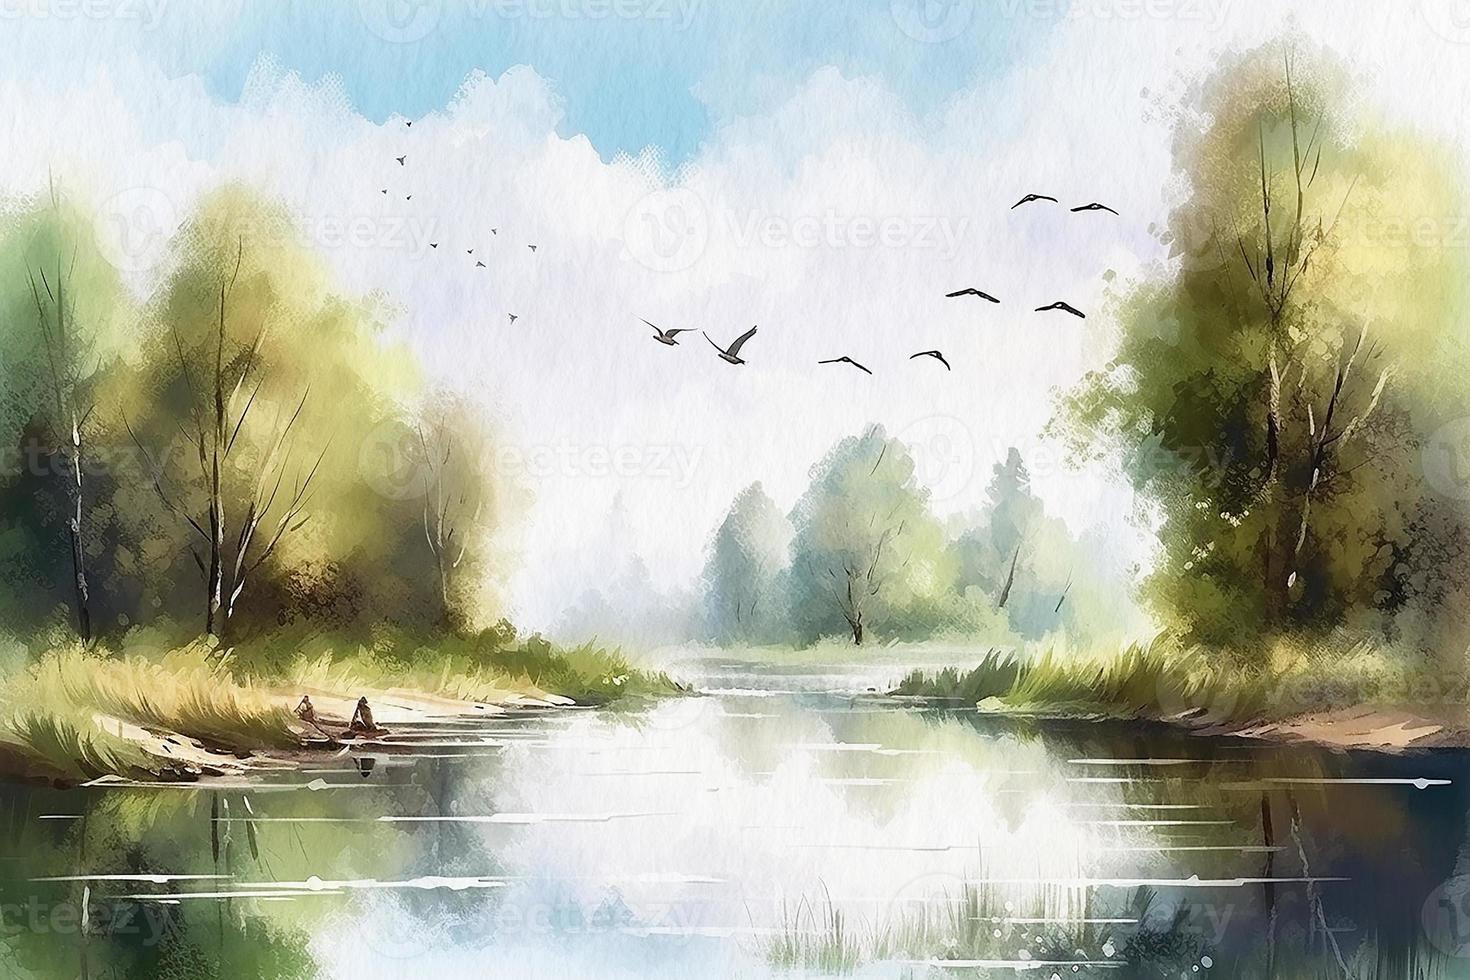 Landschaft Wald und Wald See mit fliegend Vögel, Aquarell Gemälde auf texturiert Papier. Digital Aquarell Gemälde foto